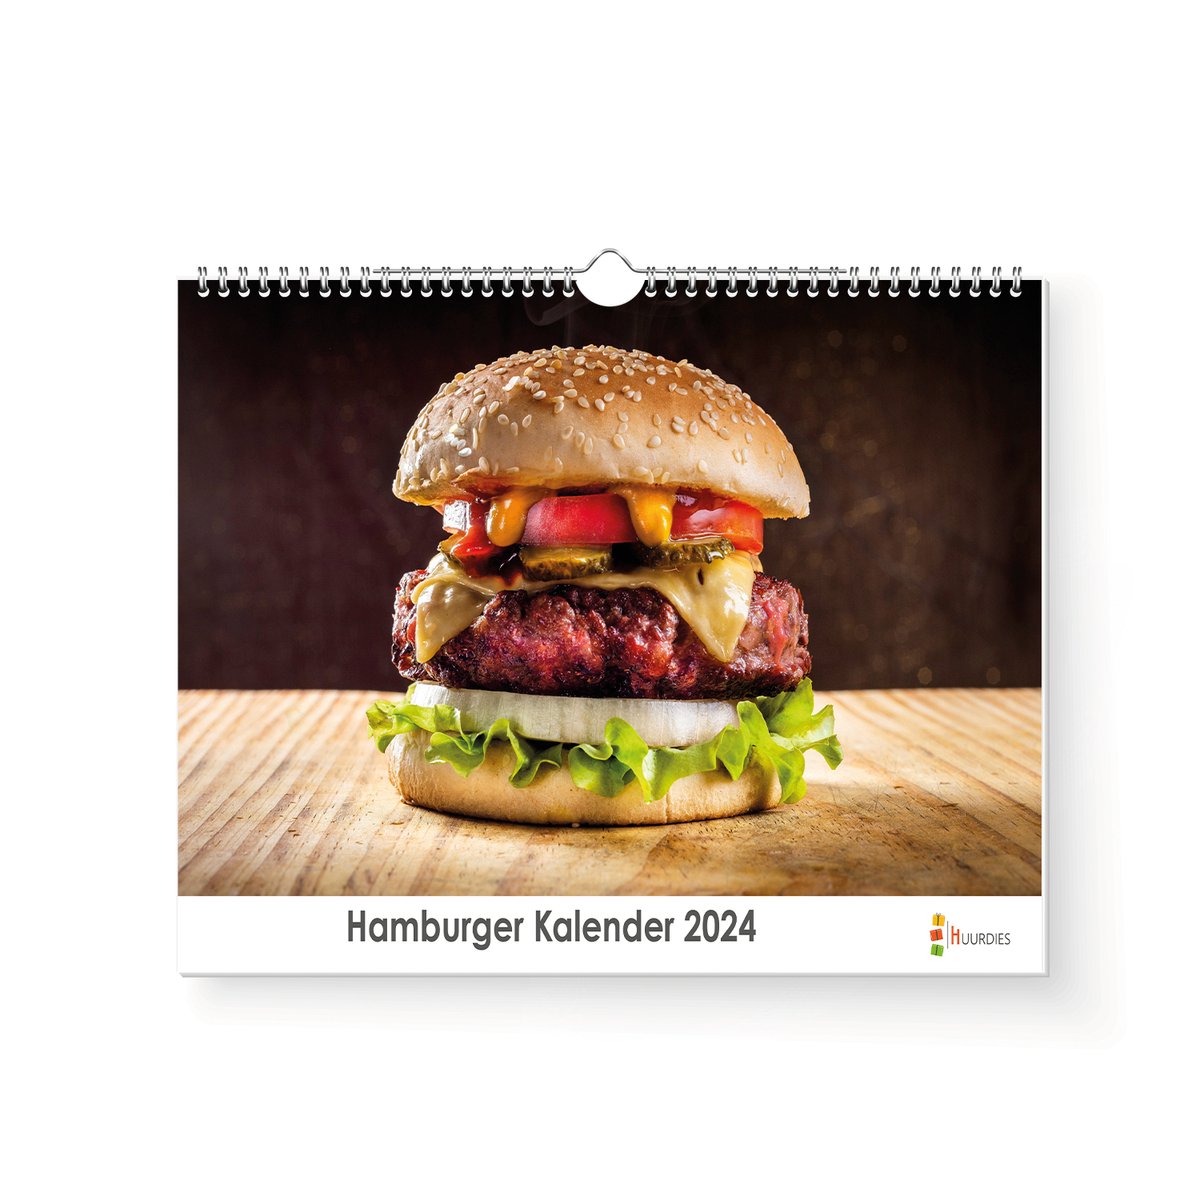 Huurdies - Hamburger Kalender - Jaarkalender 2024 - 35x24 - 300gms